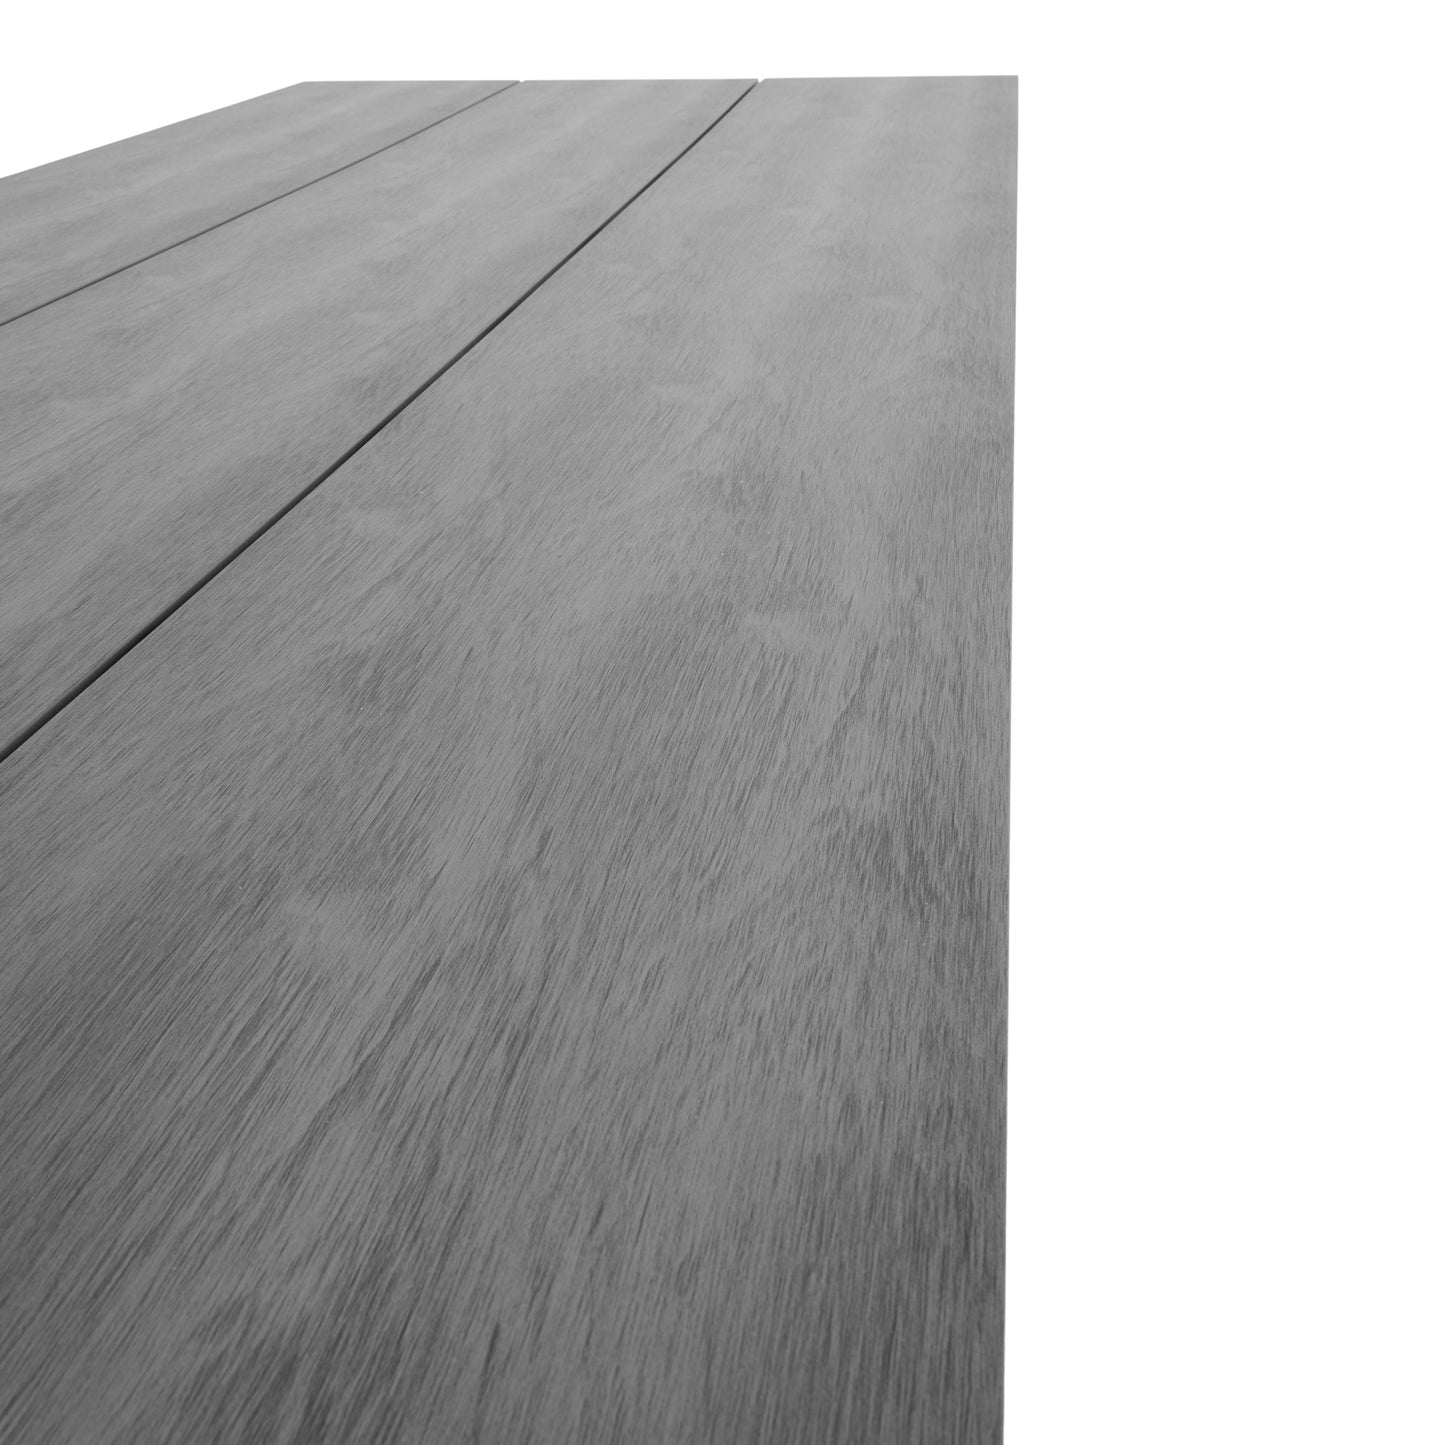 Denver Havebord - Havebord med bordplade i grå nonwood og sorte ben 210x100 cm